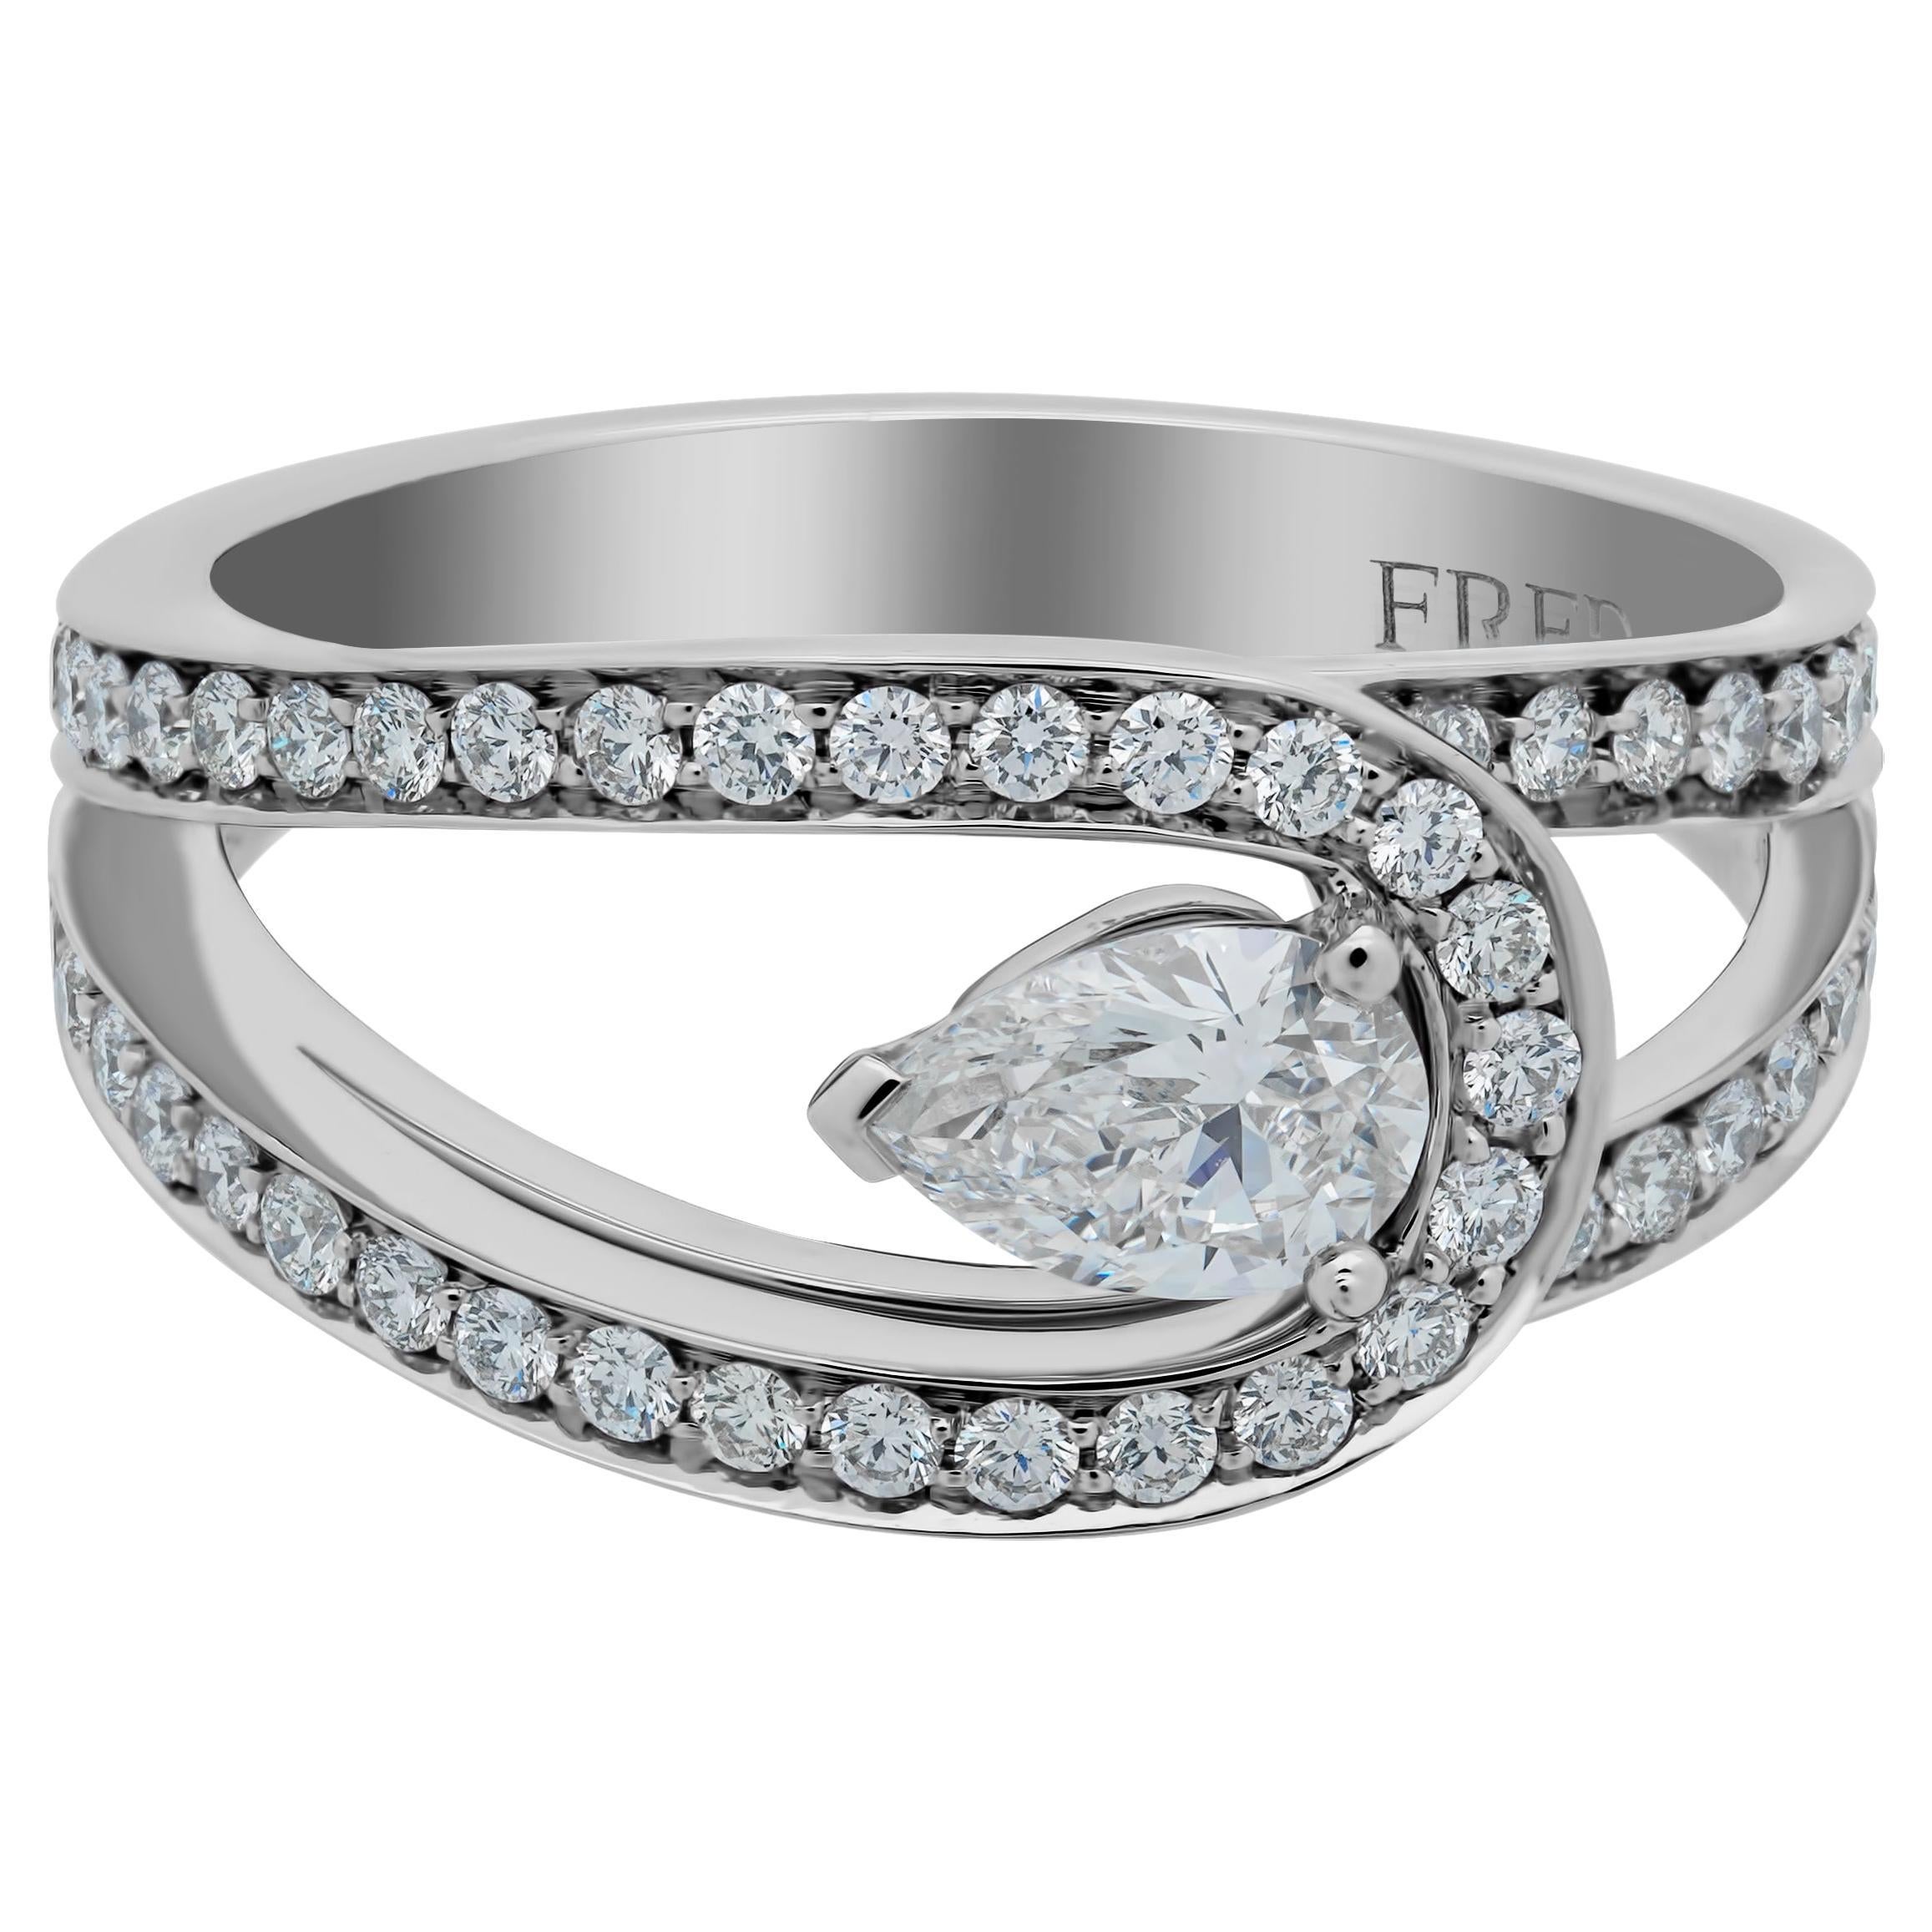 FRED Lovelight Platinum Pear Cut Center Diamond Engagement Ring sz 6 For Sale